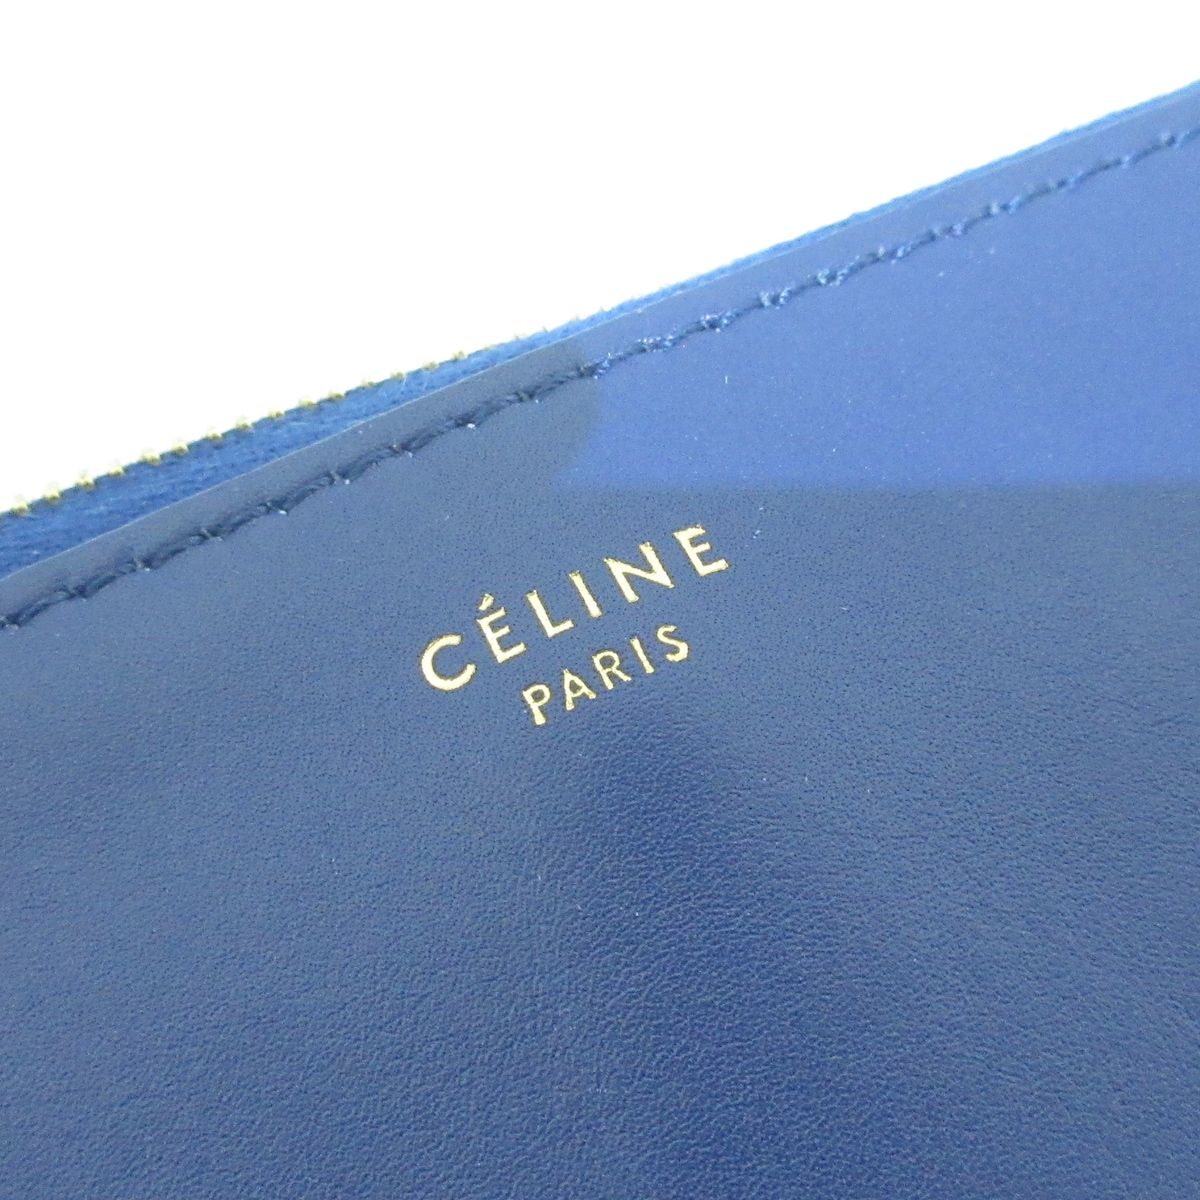 CELINE(セリーヌ) ポーチ - ネイビー×グレーベージュ レザー